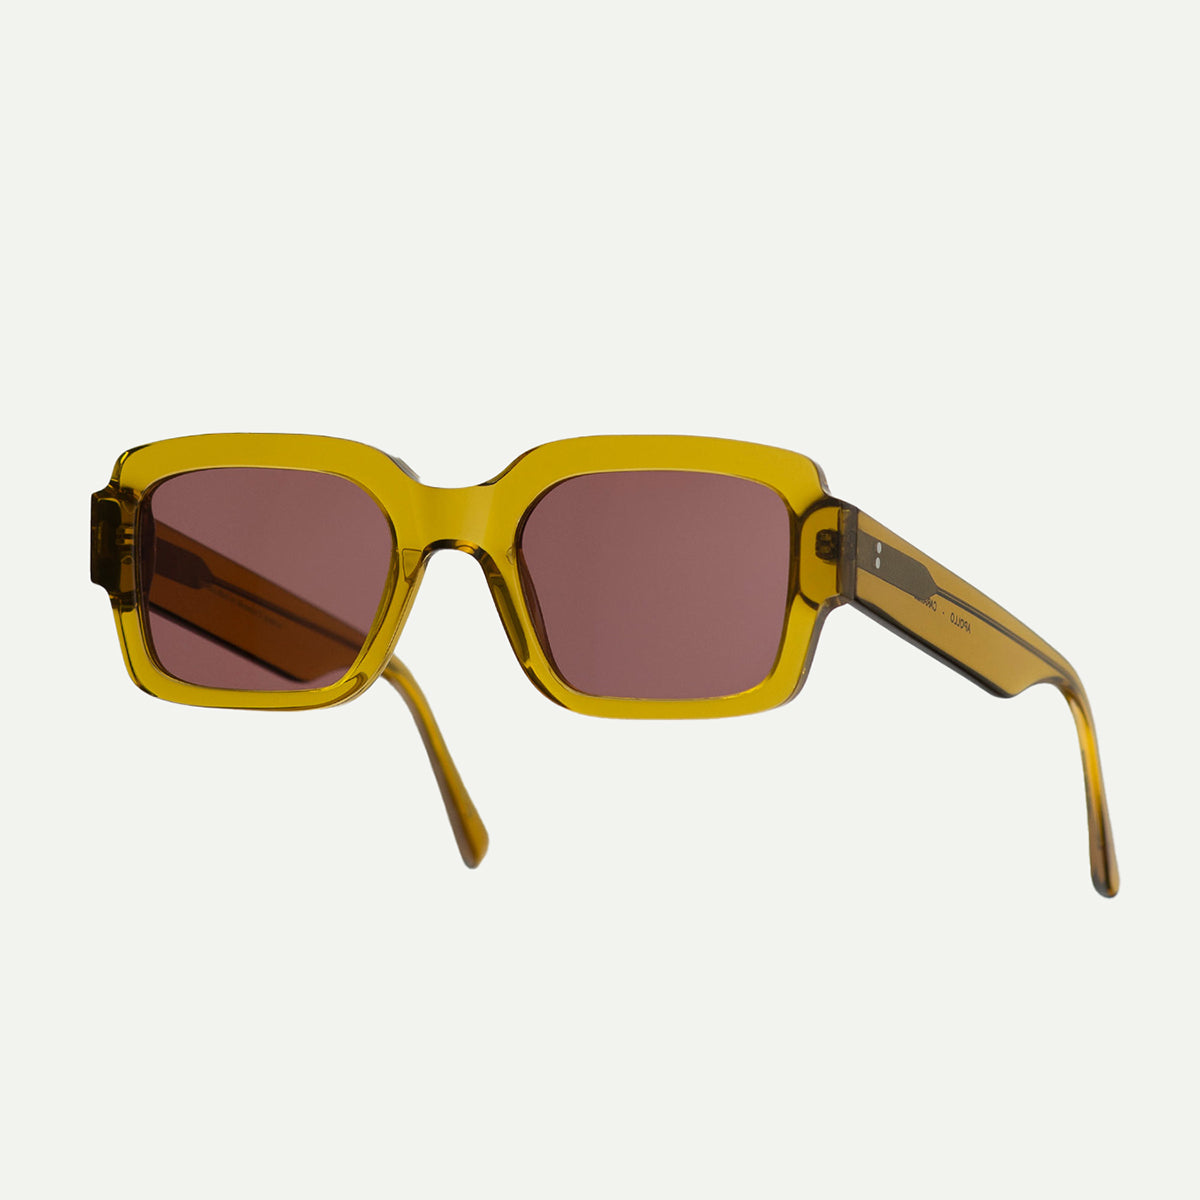 Monokel Eyewear Apollo Caramel Sunglasses